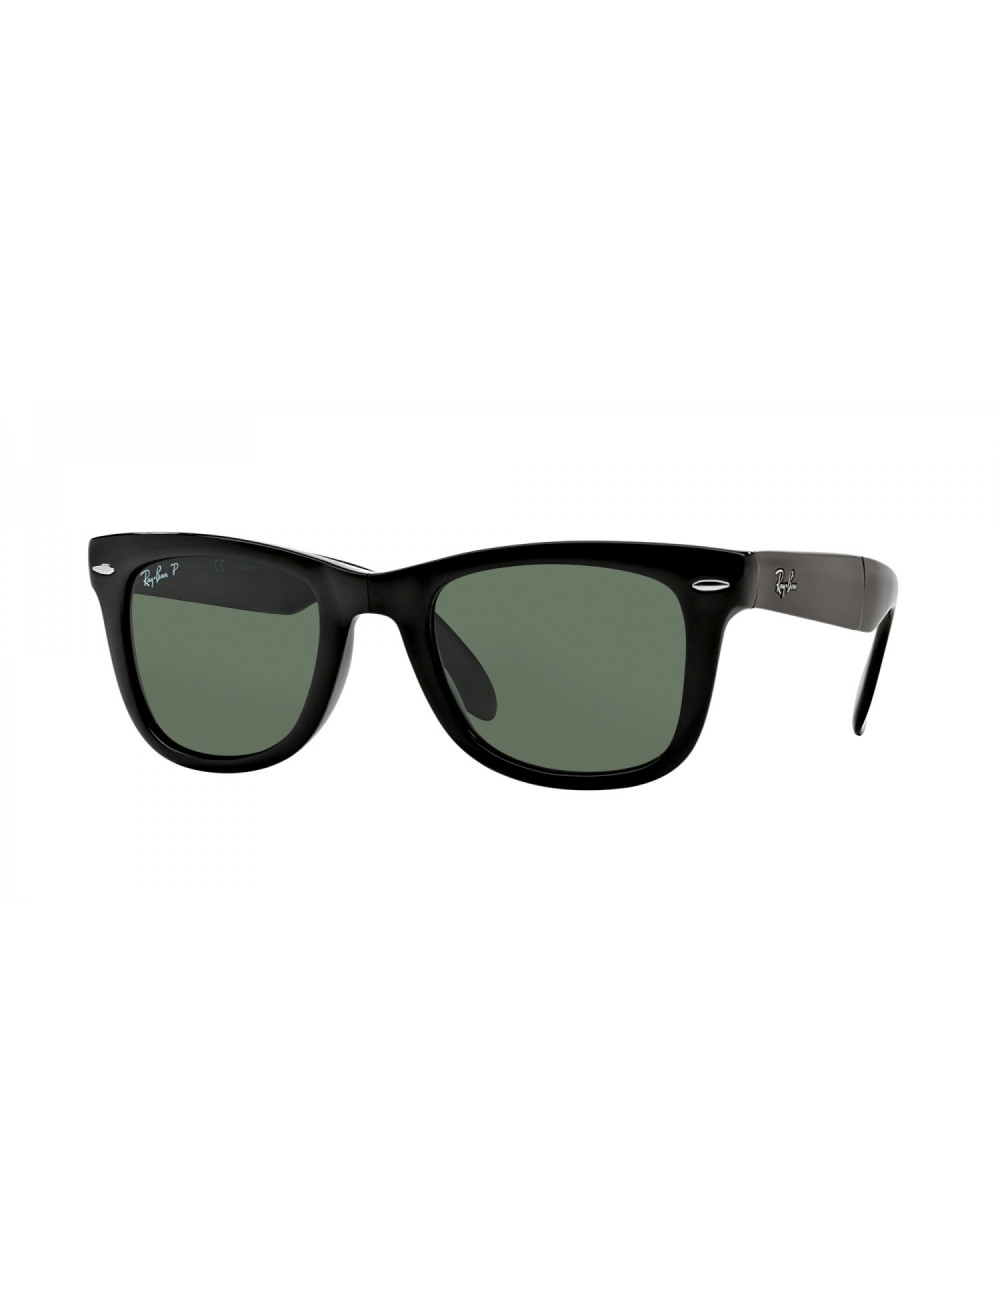 Ray Ban RB4105 601/58 Folding Wayfarer polarized sunglasses -  